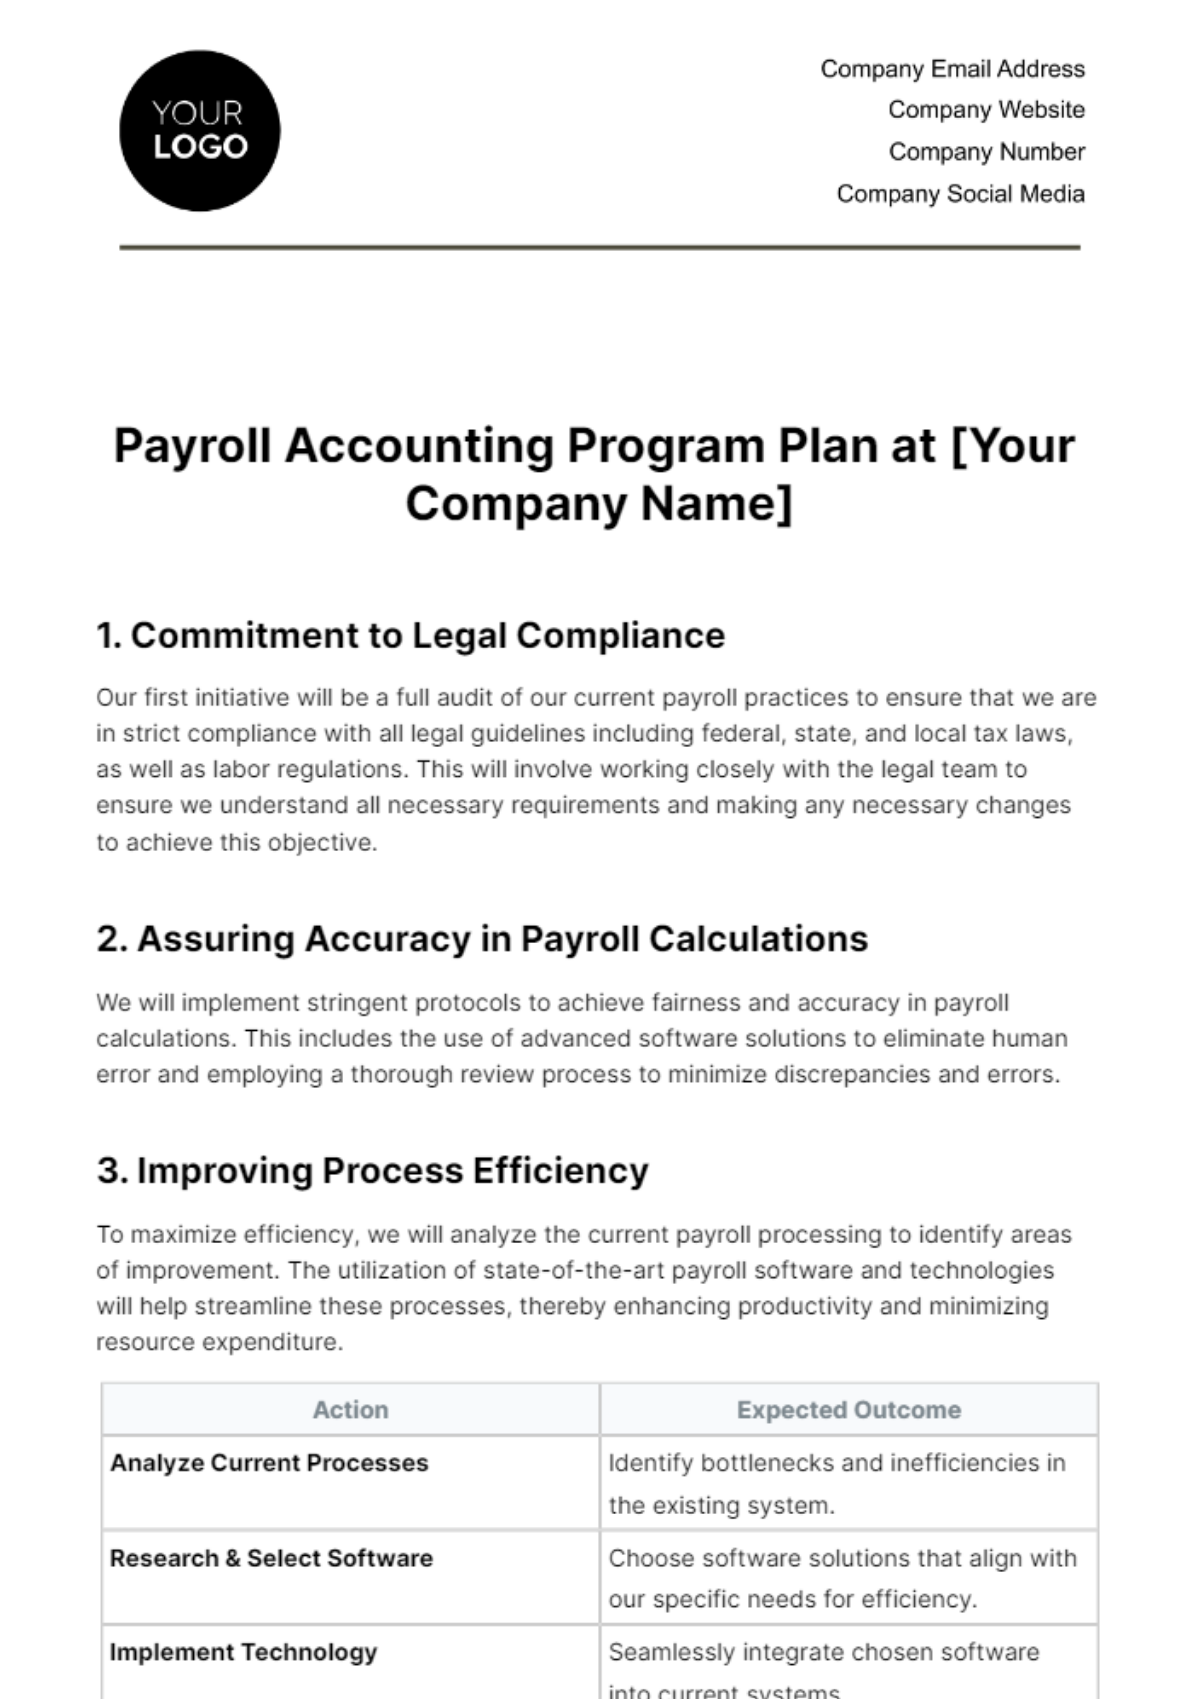 Payroll Accounting Program Plan Template